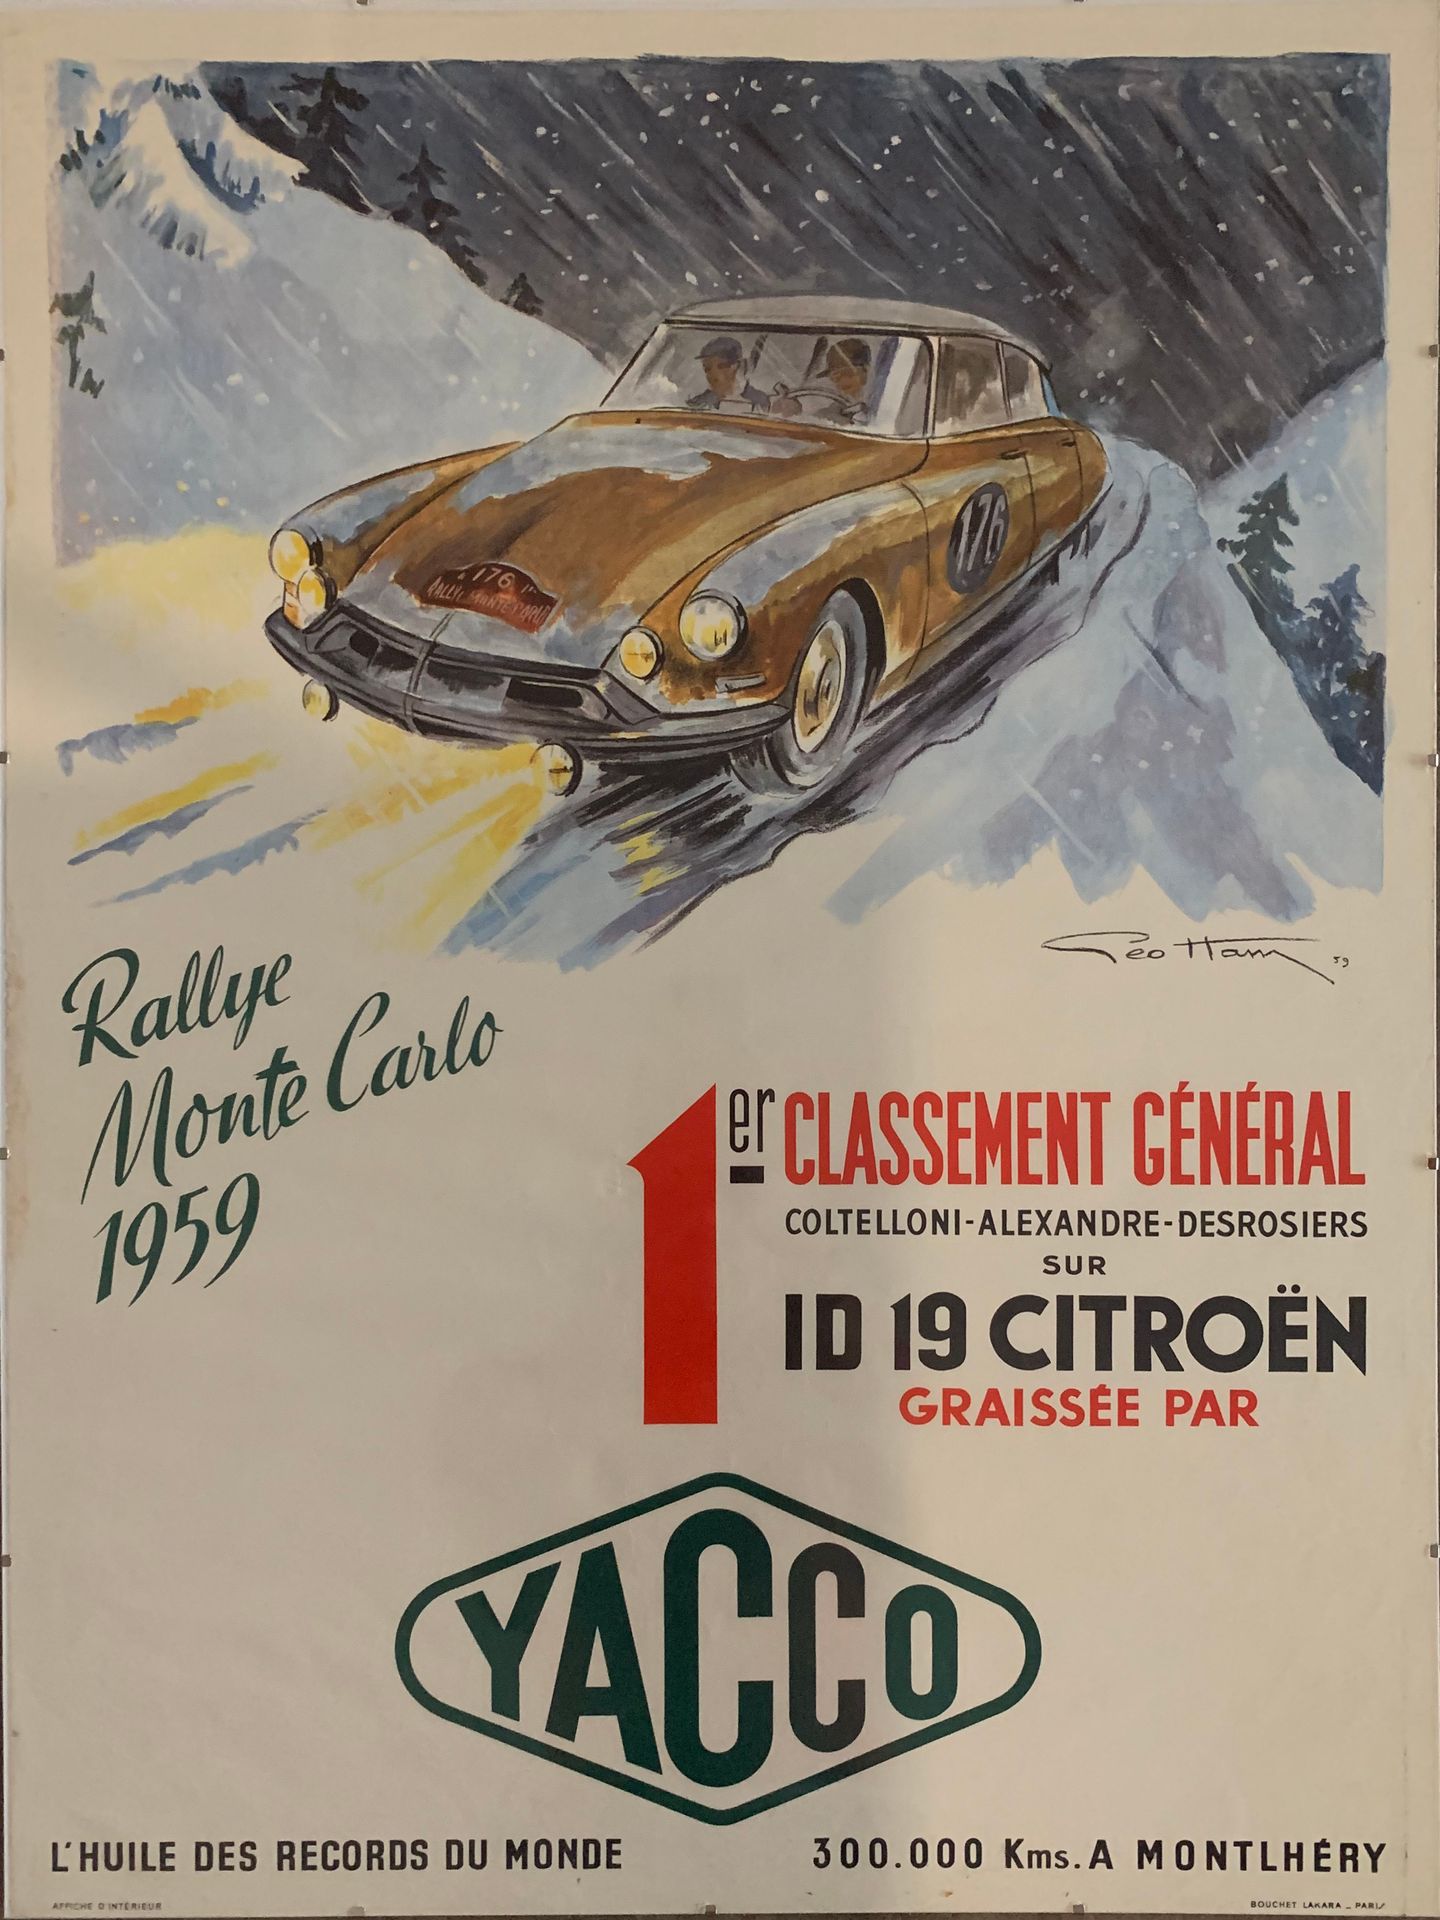 Rallye de MONTE-CARLO 1959 par GEO HAM Rallye de MONTE-CARLO 1959 par GEO HAM 
A&hellip;